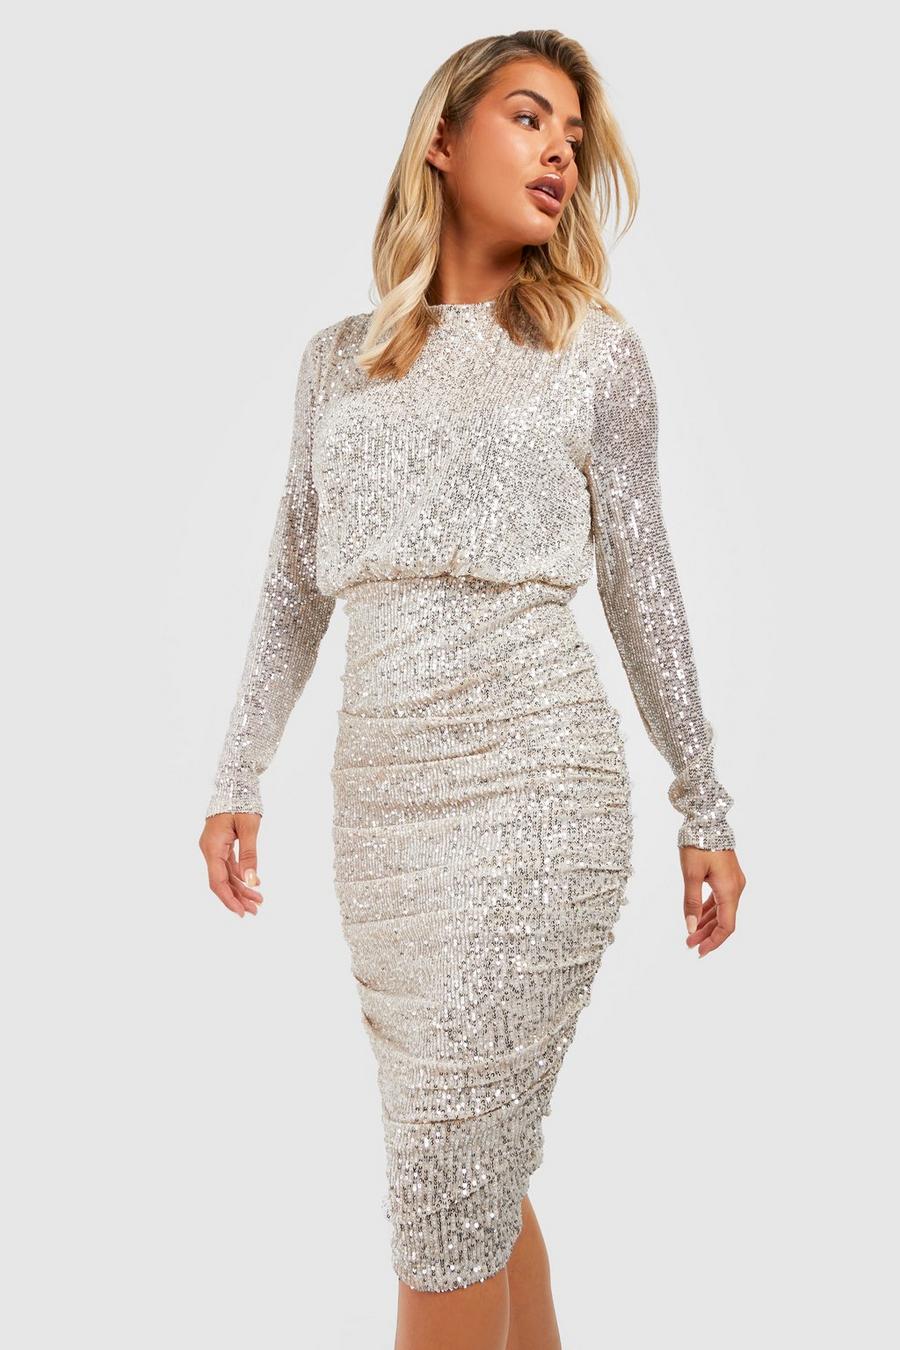 Silver Sequin Dresses